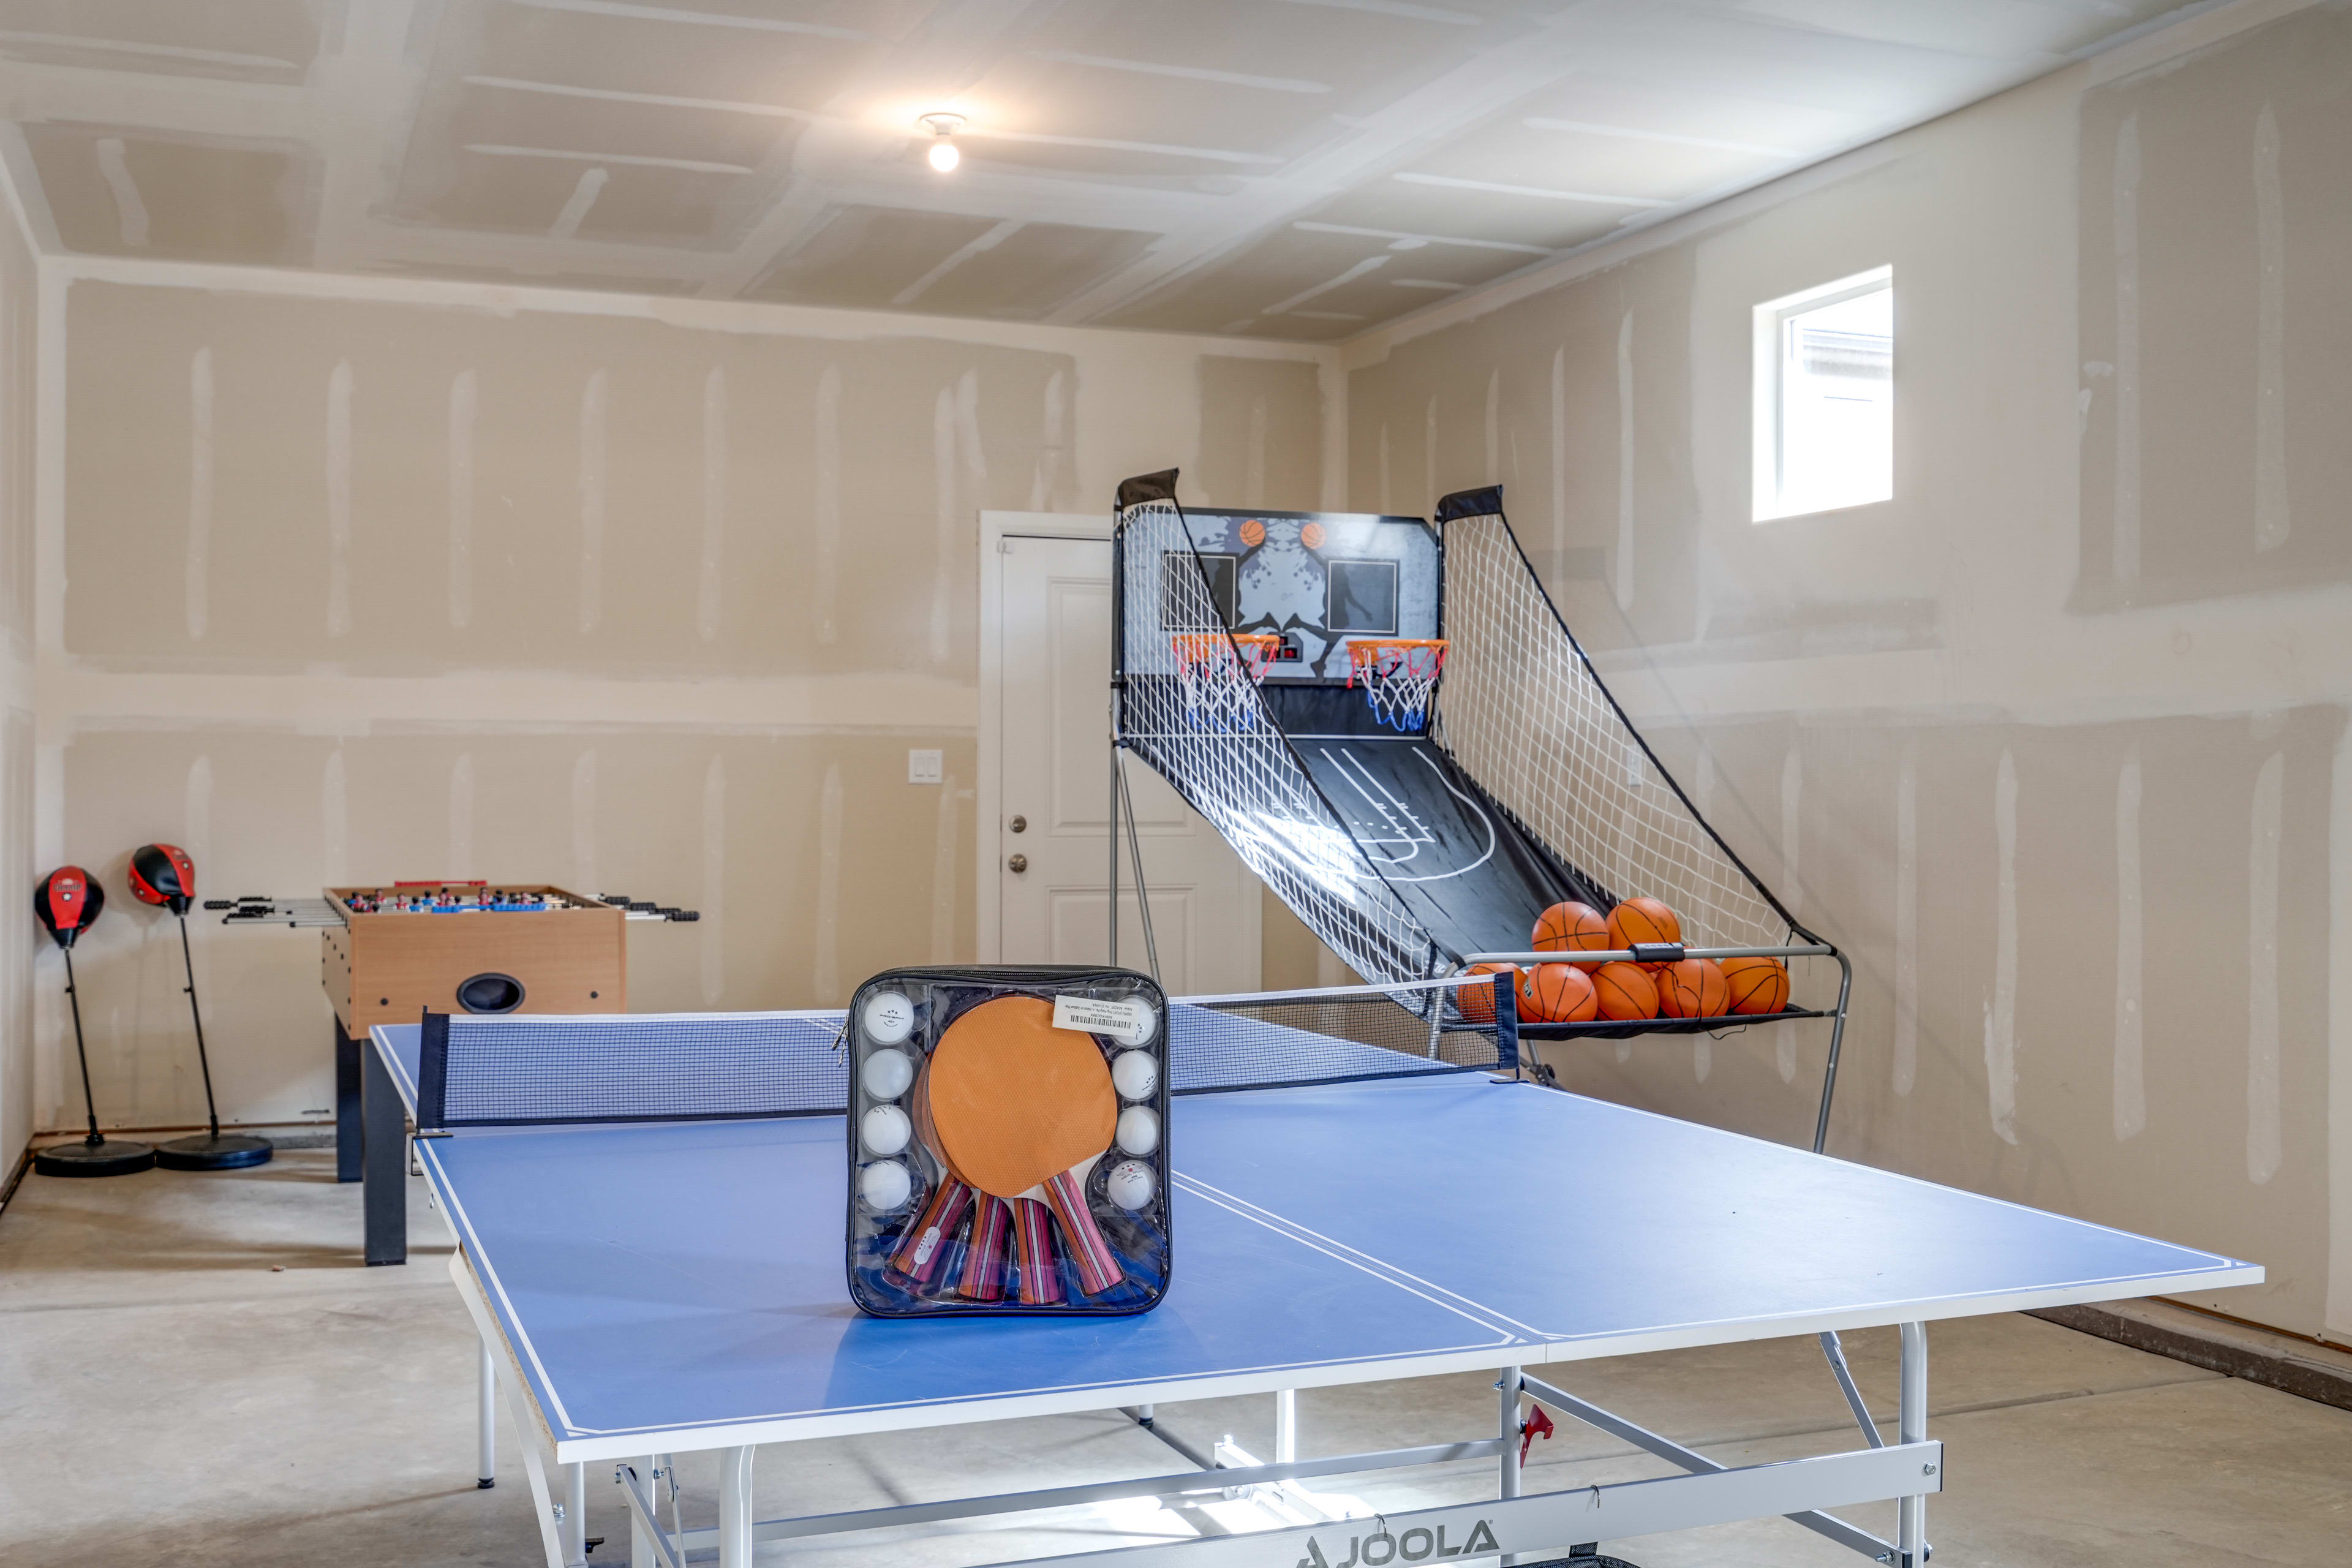 Game Room | 1st Floor | Ping-Pong Table | Foosball | Basketball Arcade Game